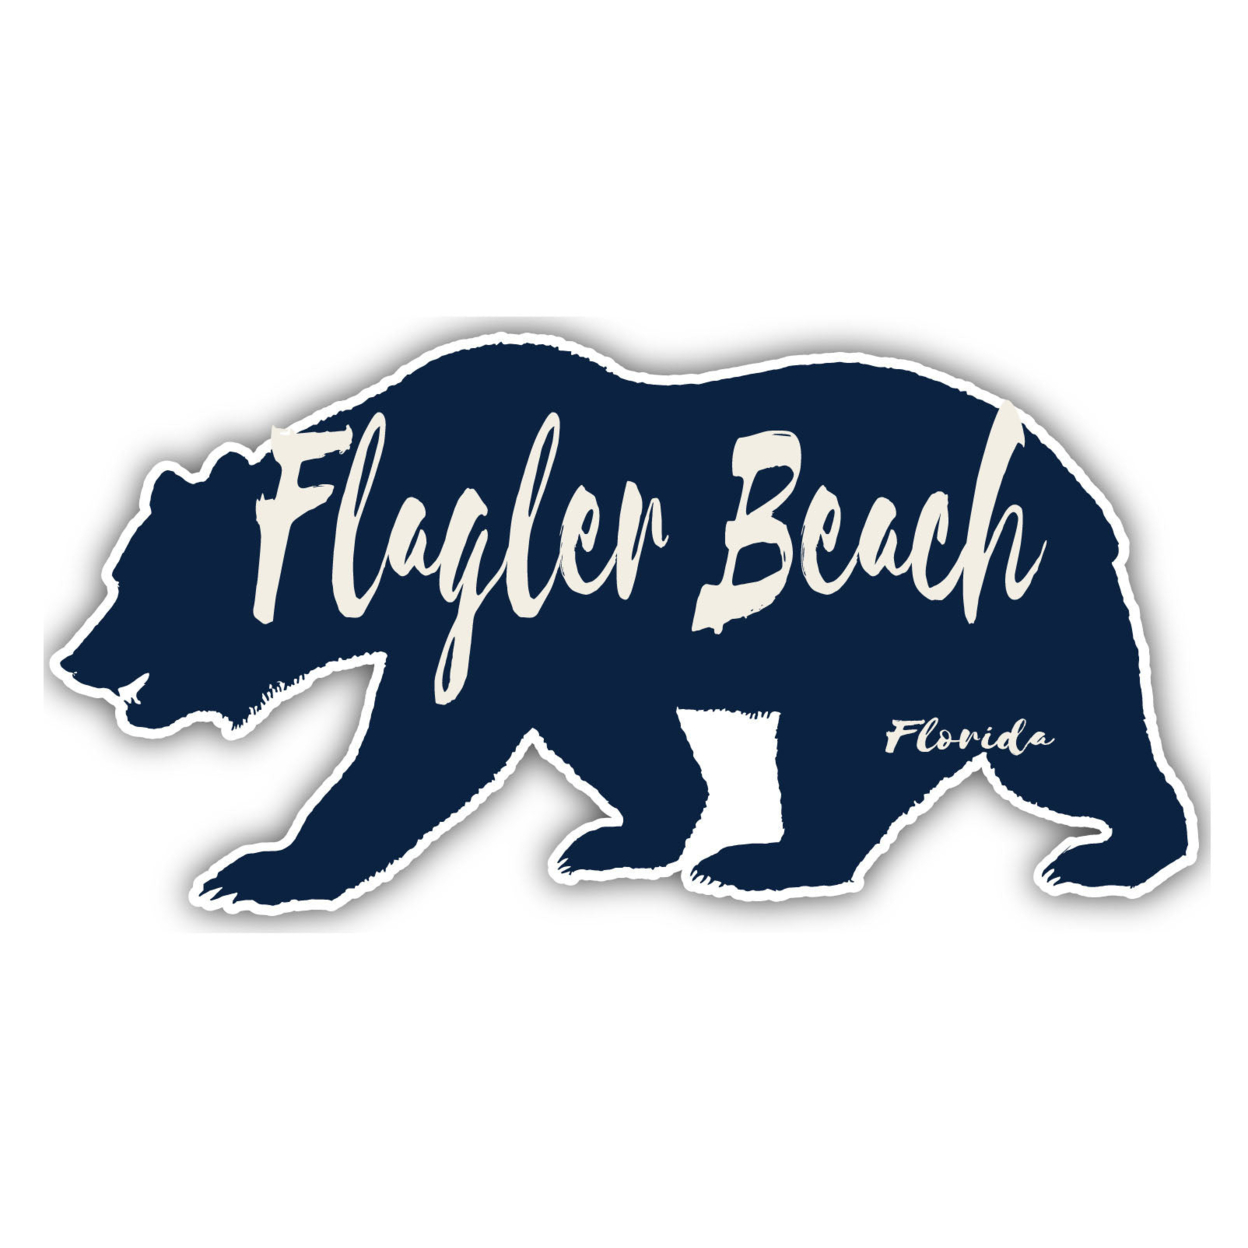 Flagler Beach Florida Souvenir Decorative Stickers (Choose Theme And Size) - 4-Pack, 12-Inch, Bear